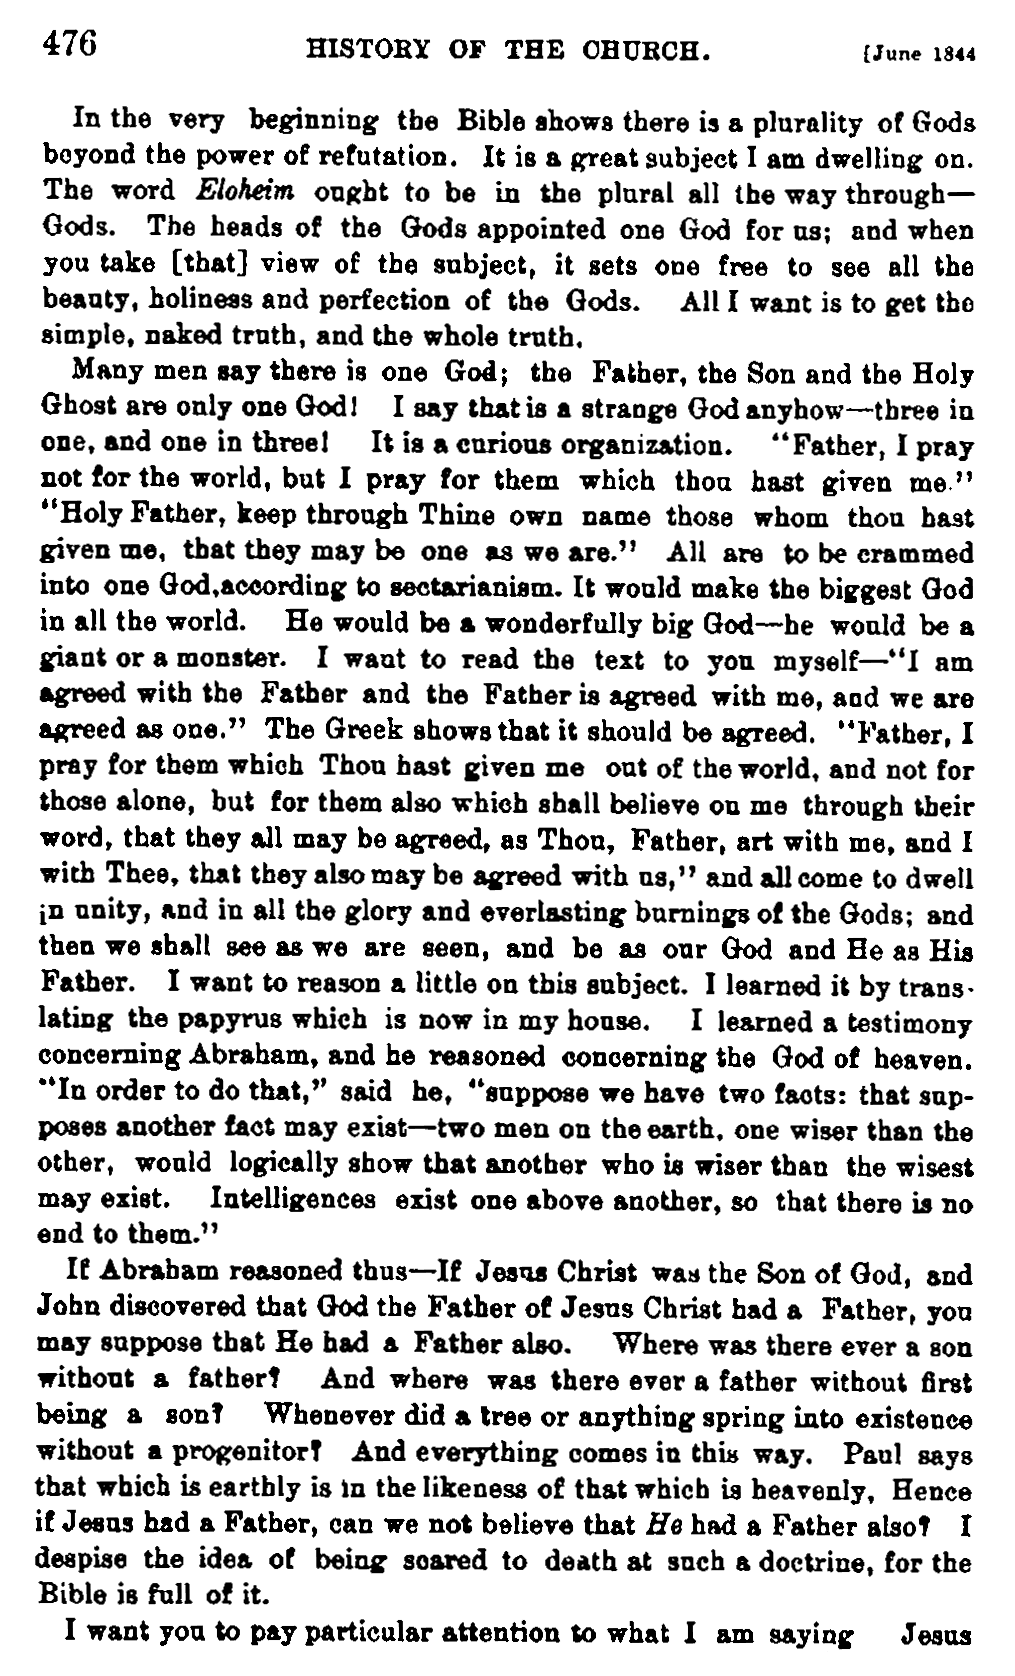 History of the Church, vol. 6, p. 476